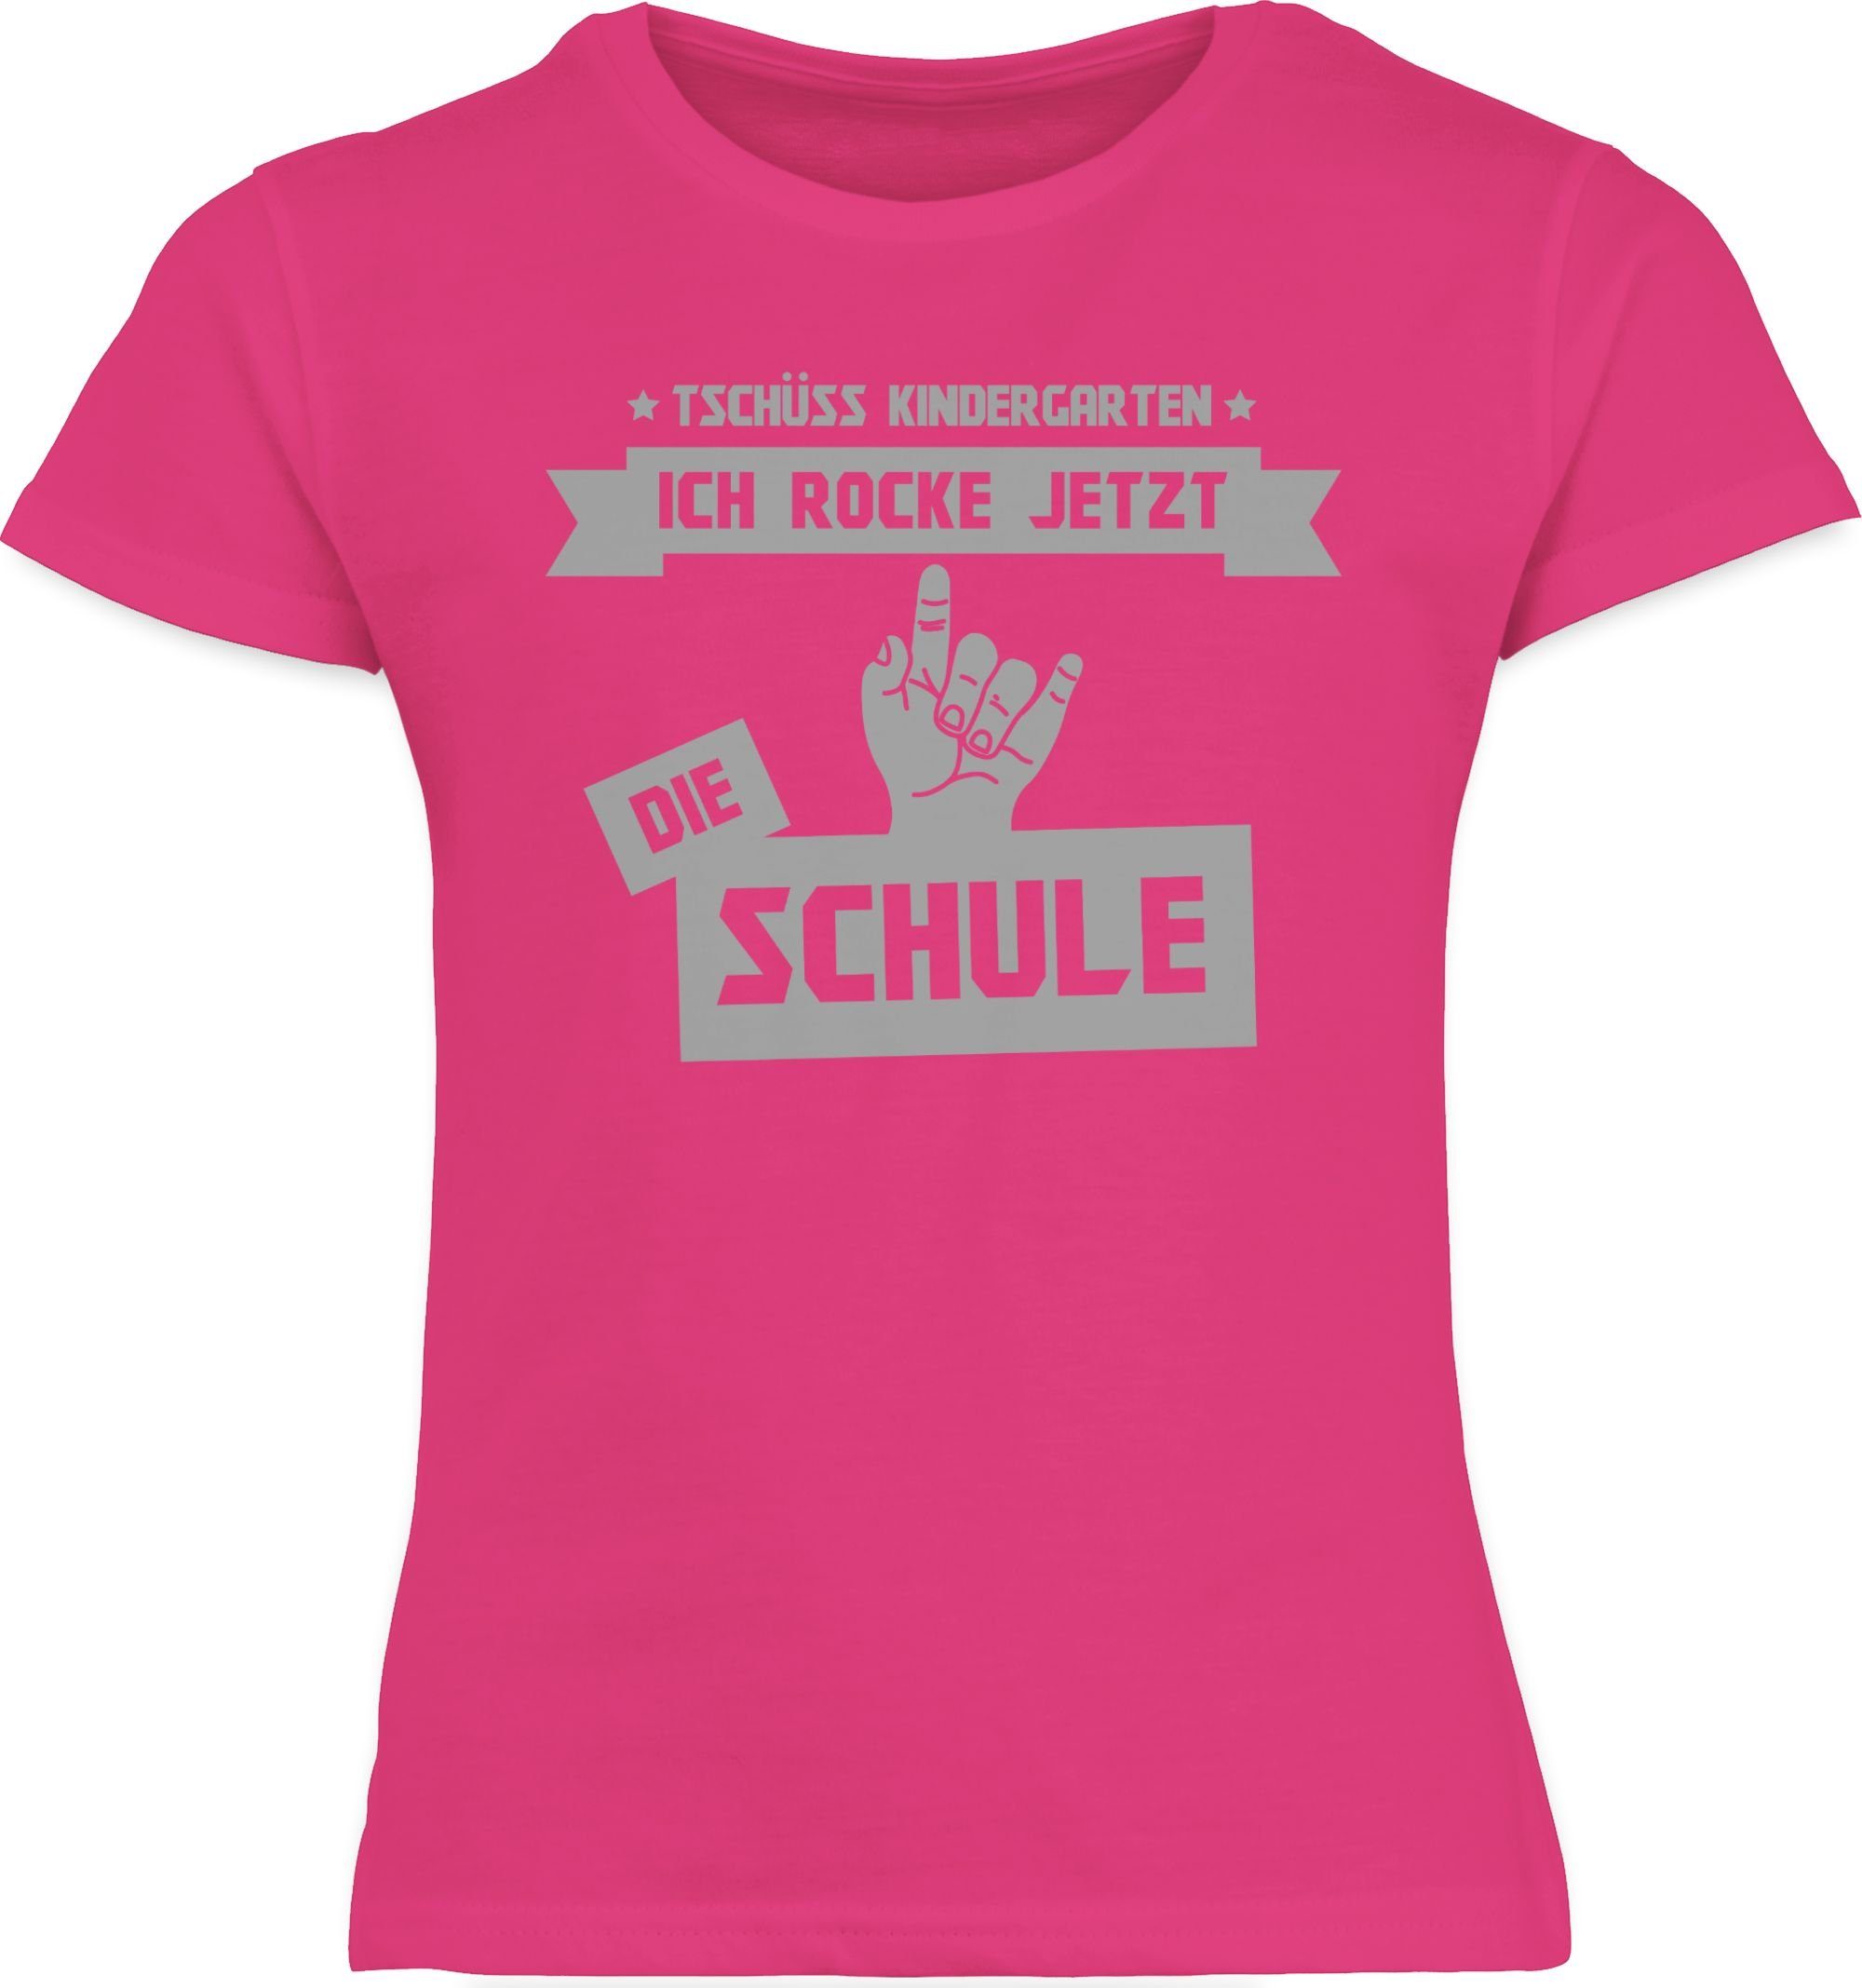 Shirtracer T-Shirt Tschüss Einschulung die Schule Fuchsia rocke 2 ich Mädchen jetzt Kindergarten